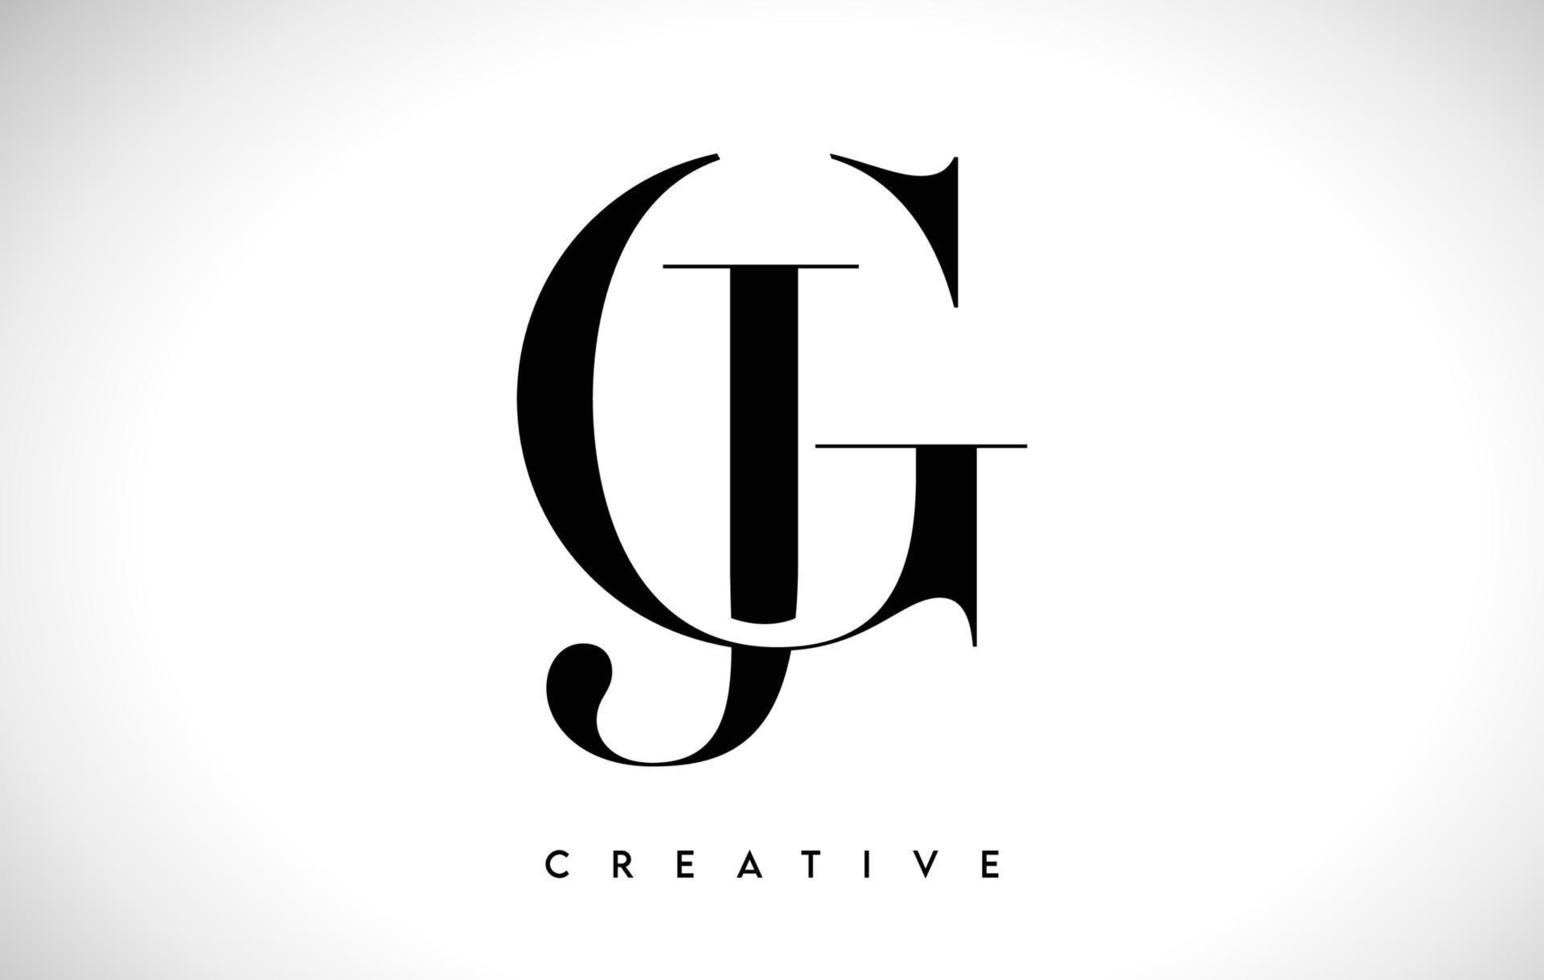 GJ Artistic Letter Logo Design with Serif Font in Black and White Colors Vector Illustration